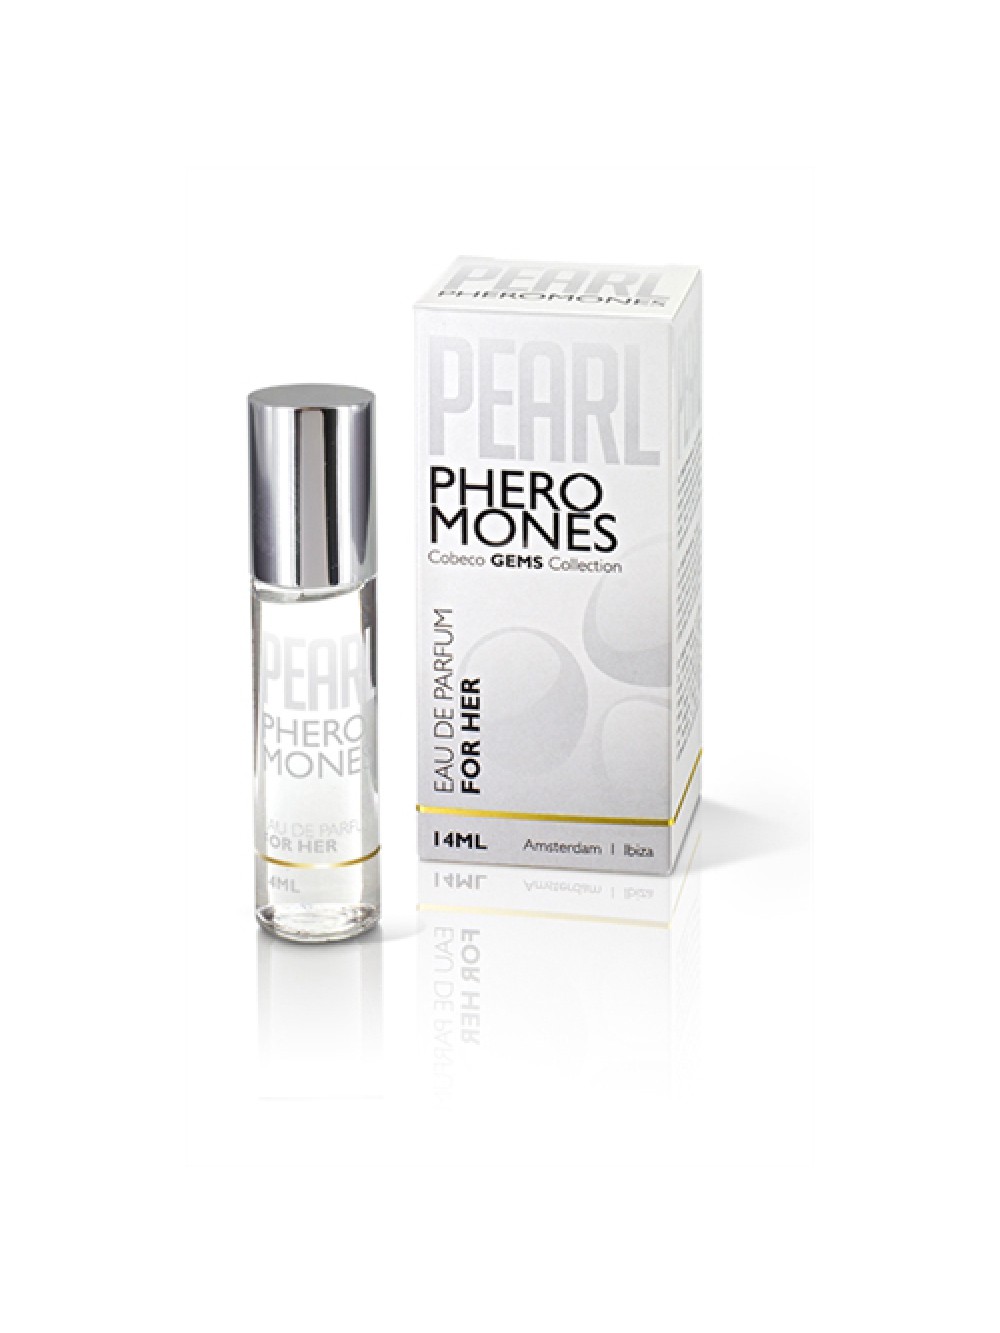 Pearl Women Parfum